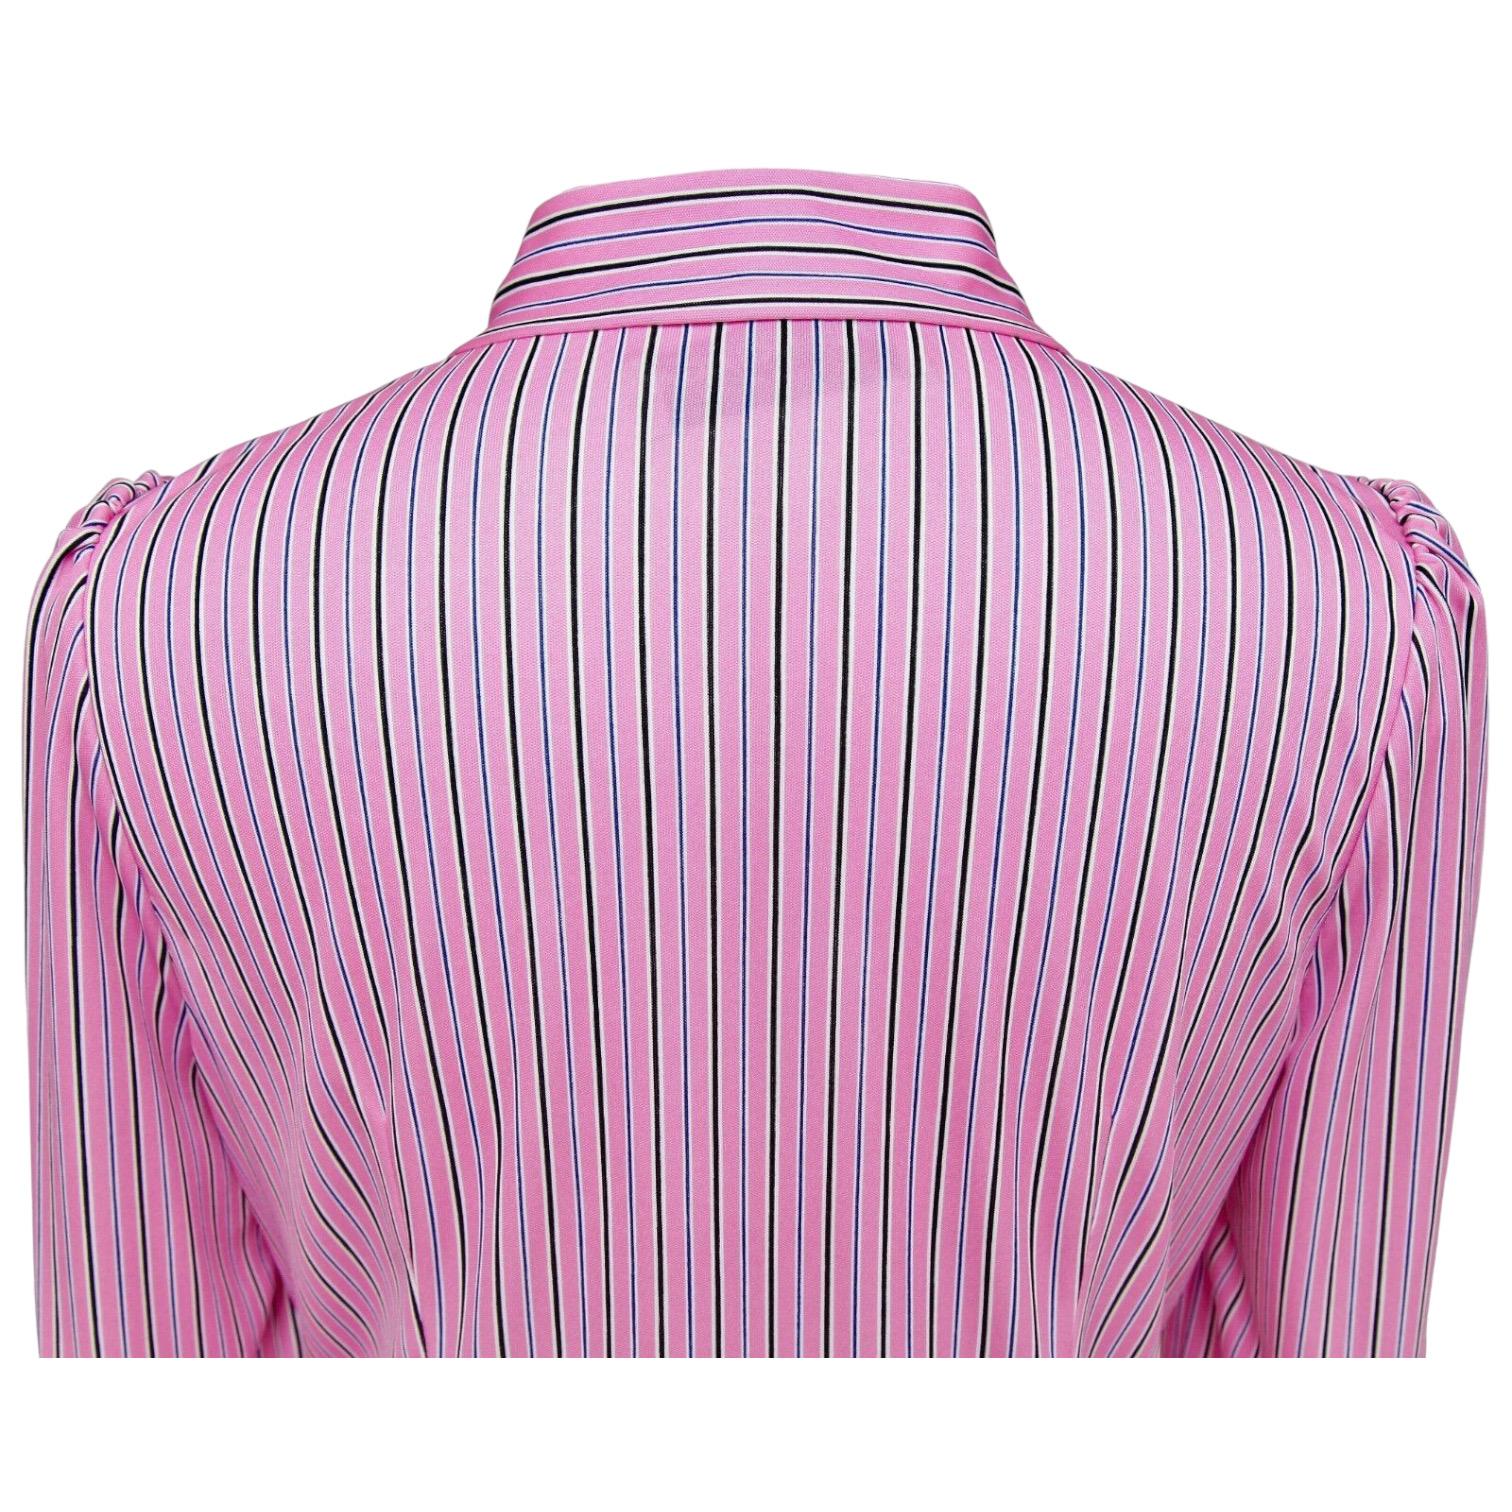 BALENCIAGA Striped Top Shirt Blouse 3/4 Sleeve Neck Tie Rose White Black 38 NWT For Sale 3